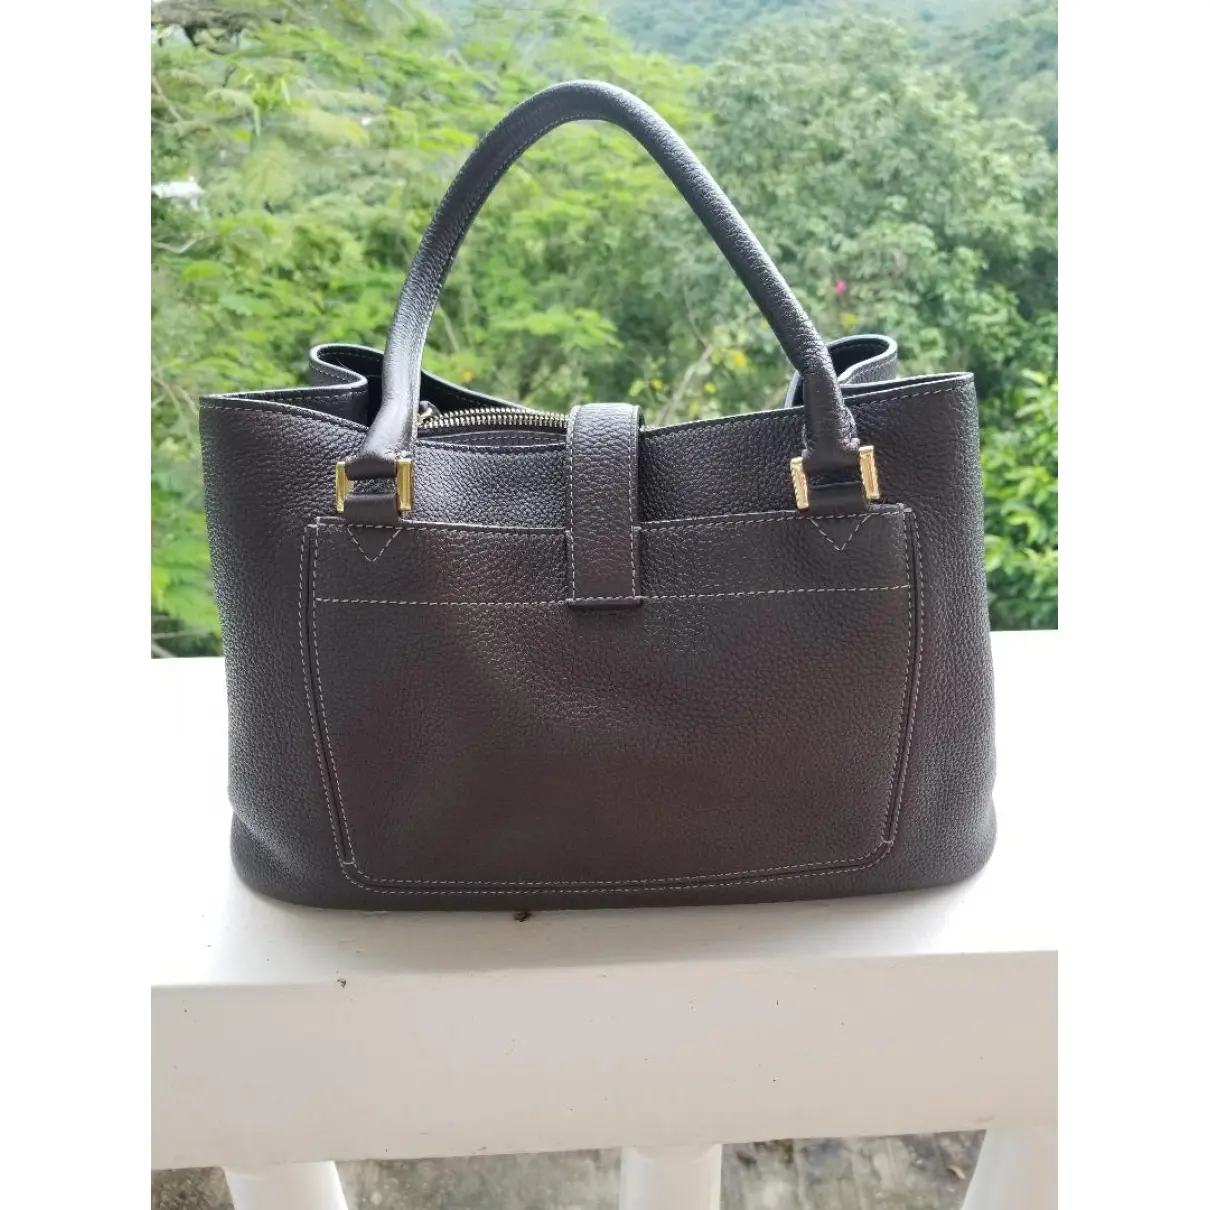 Loro Piana Bellevue leather handbag for sale